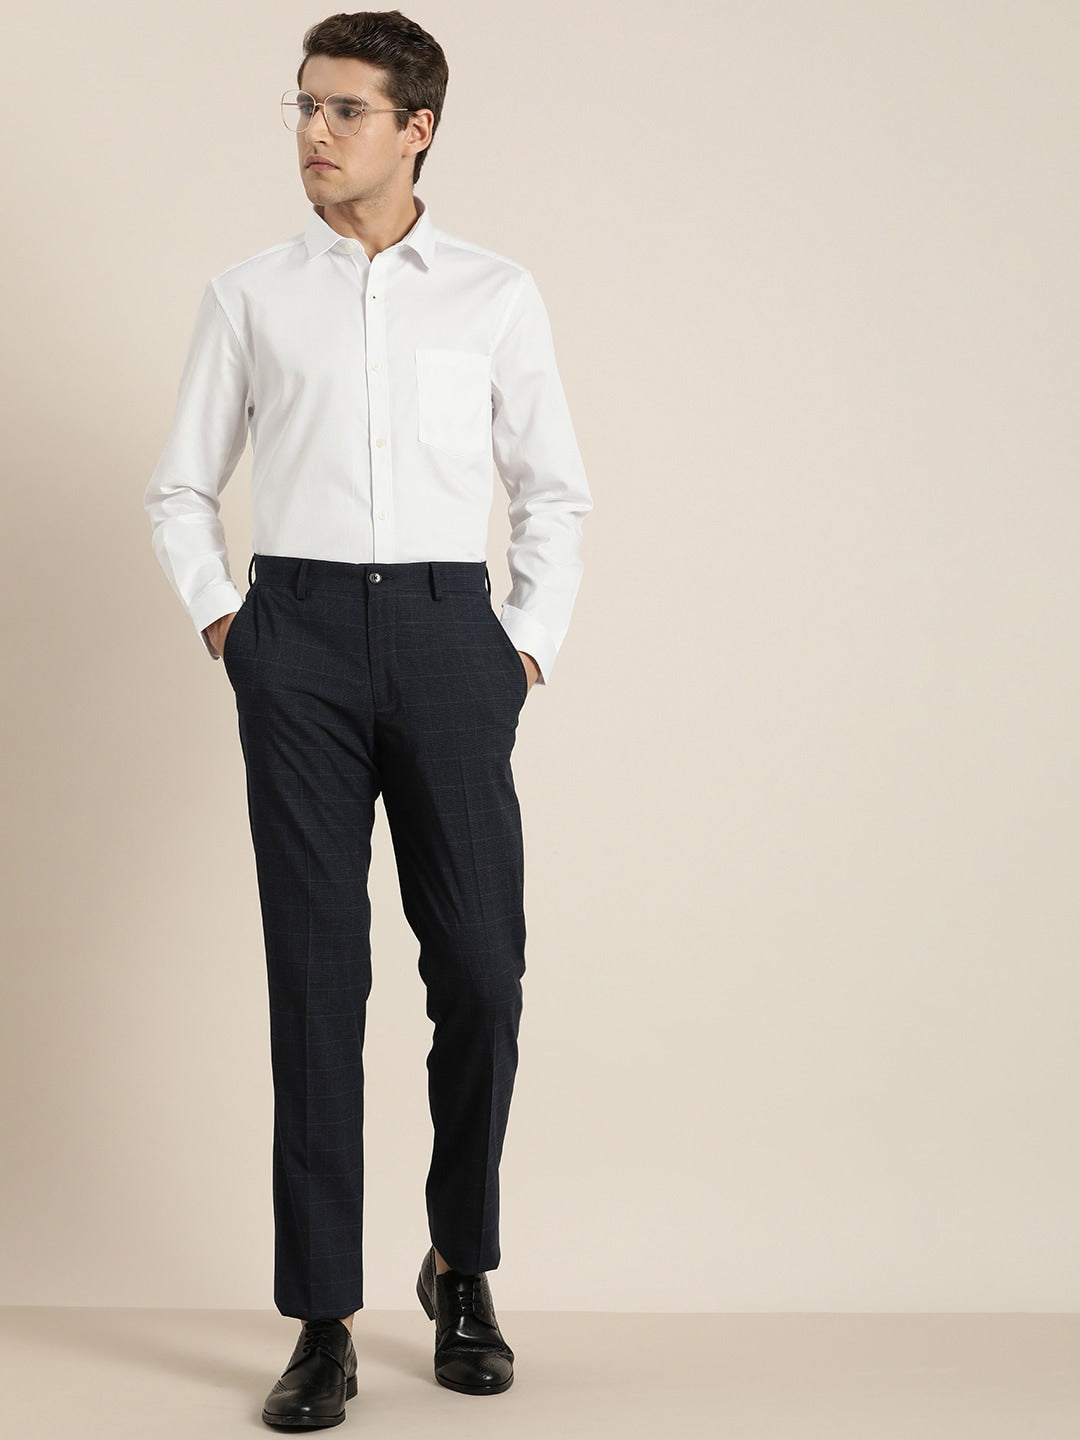 WHITE SAND Men's Trousers Art. SU66 83 GREG 97%Cotton 3%Elastane Made IN  Italy | eBay